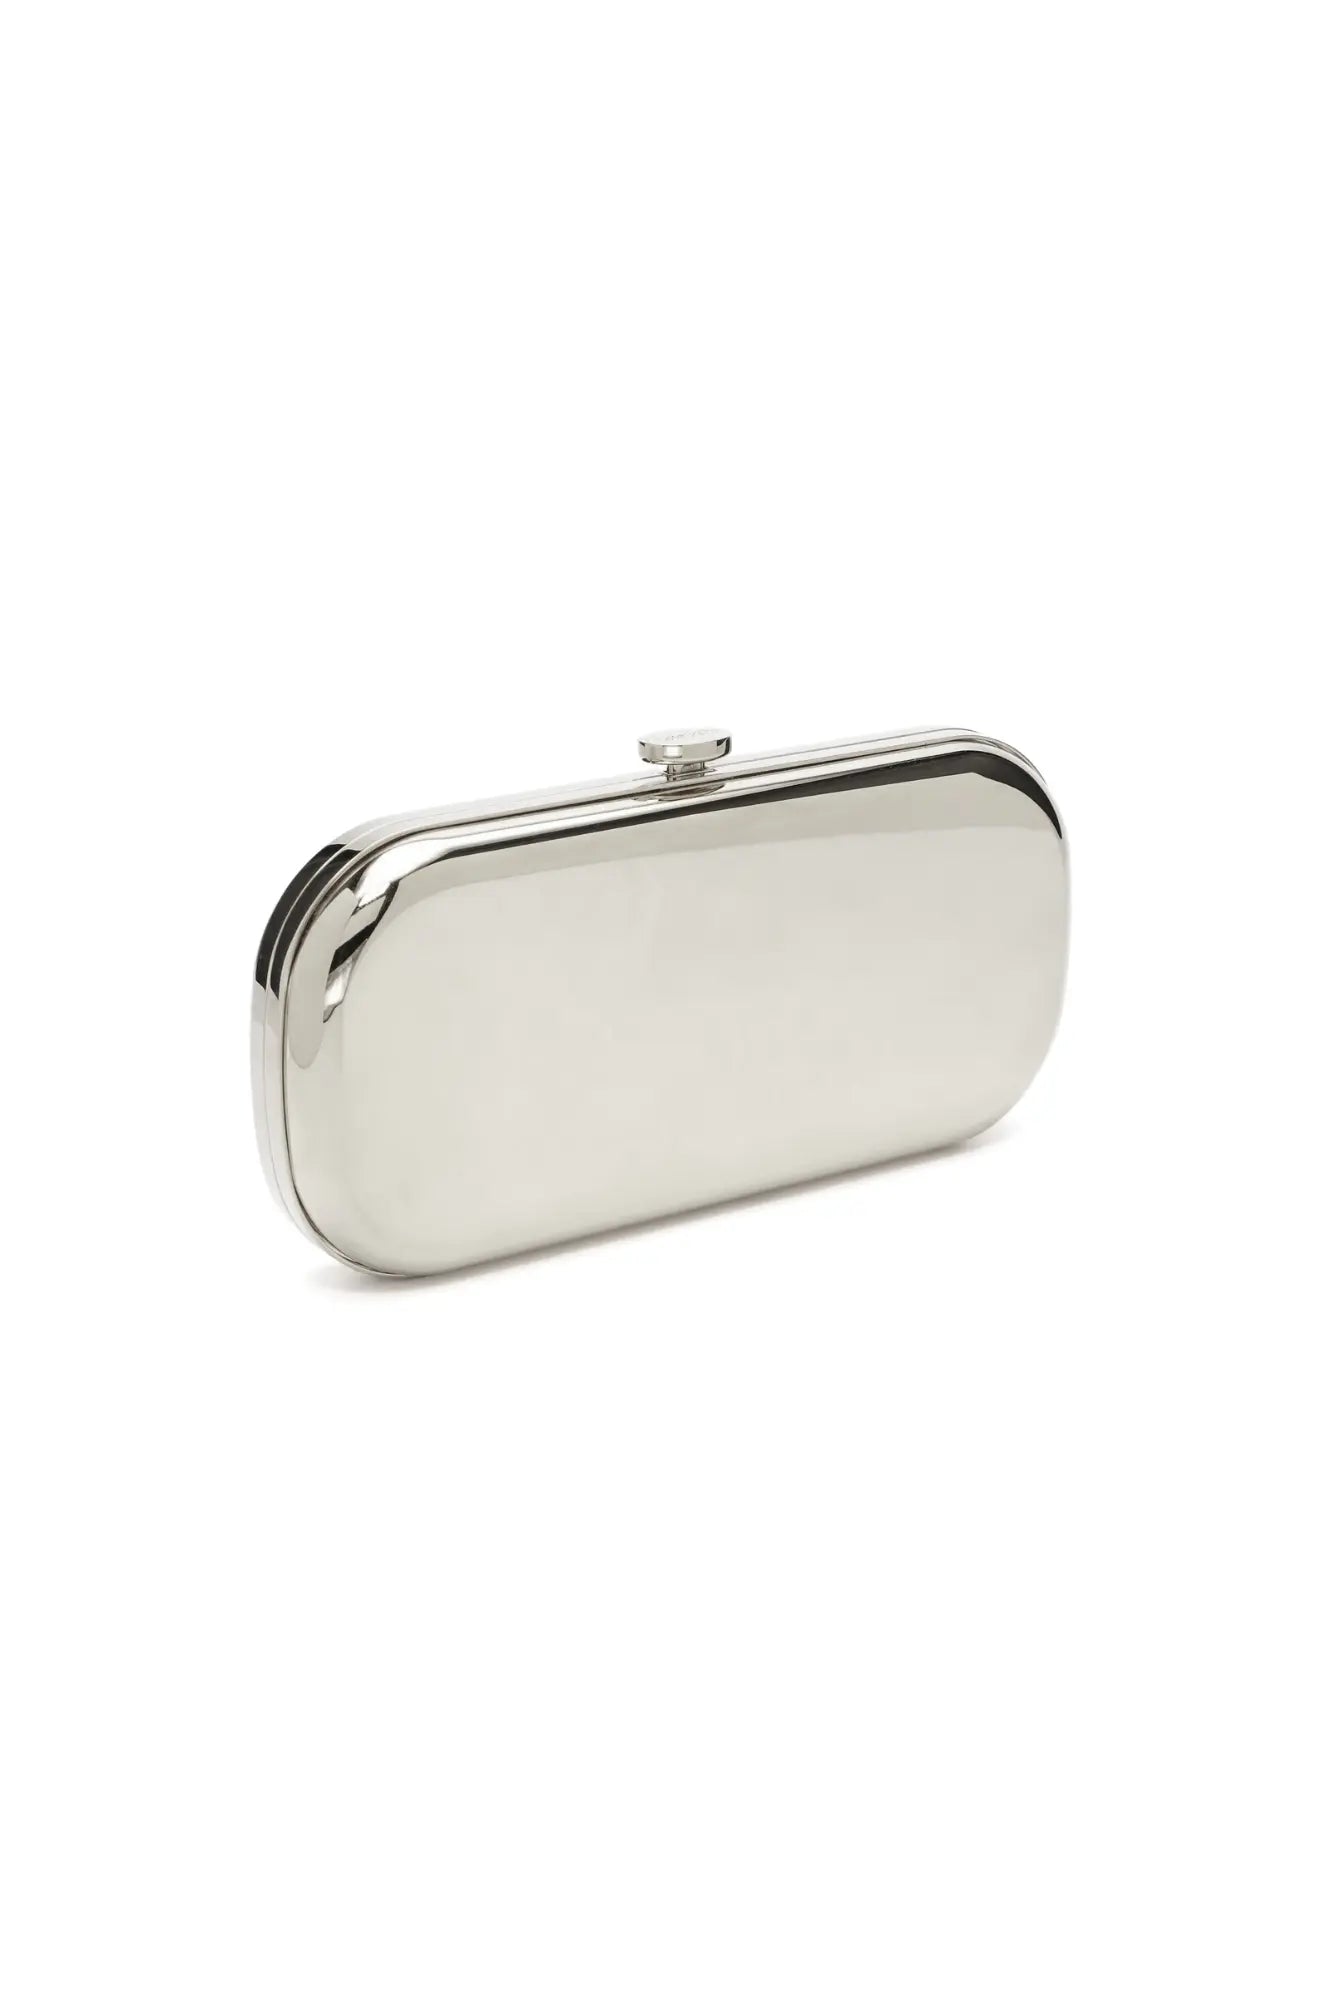 The Bella Rosa Collection Bella Clutch Silver Mirror Metallic Grande purse on a white background.